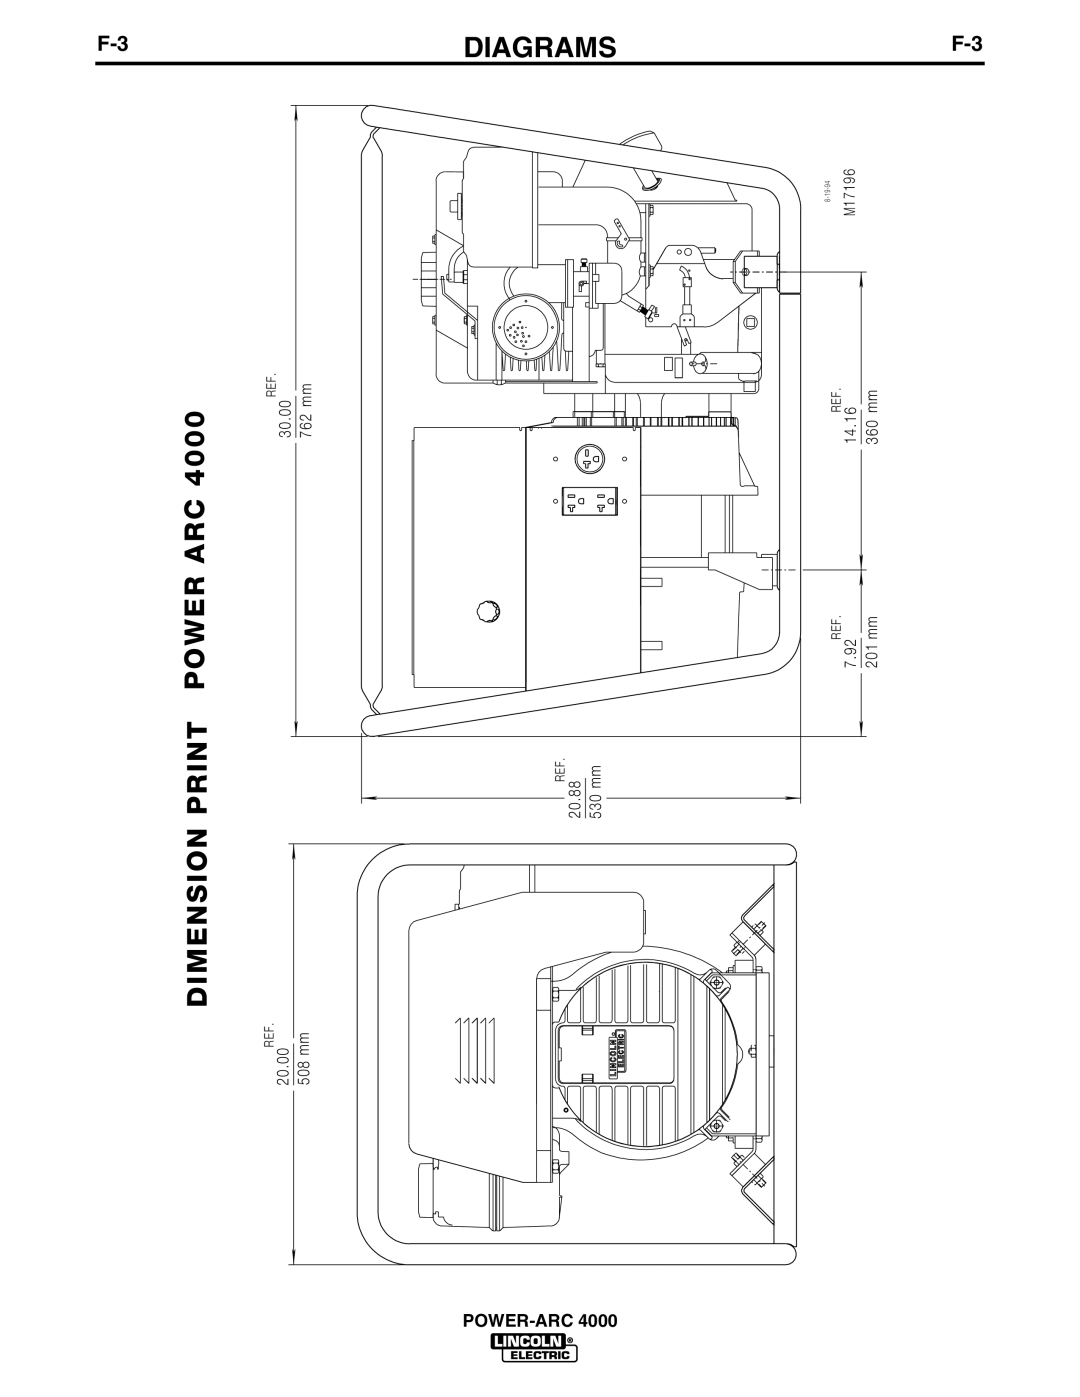 Lincoln POWER-ARC 4000 manual Diagrams, Dimension Print Power Arc, Power-Arc 